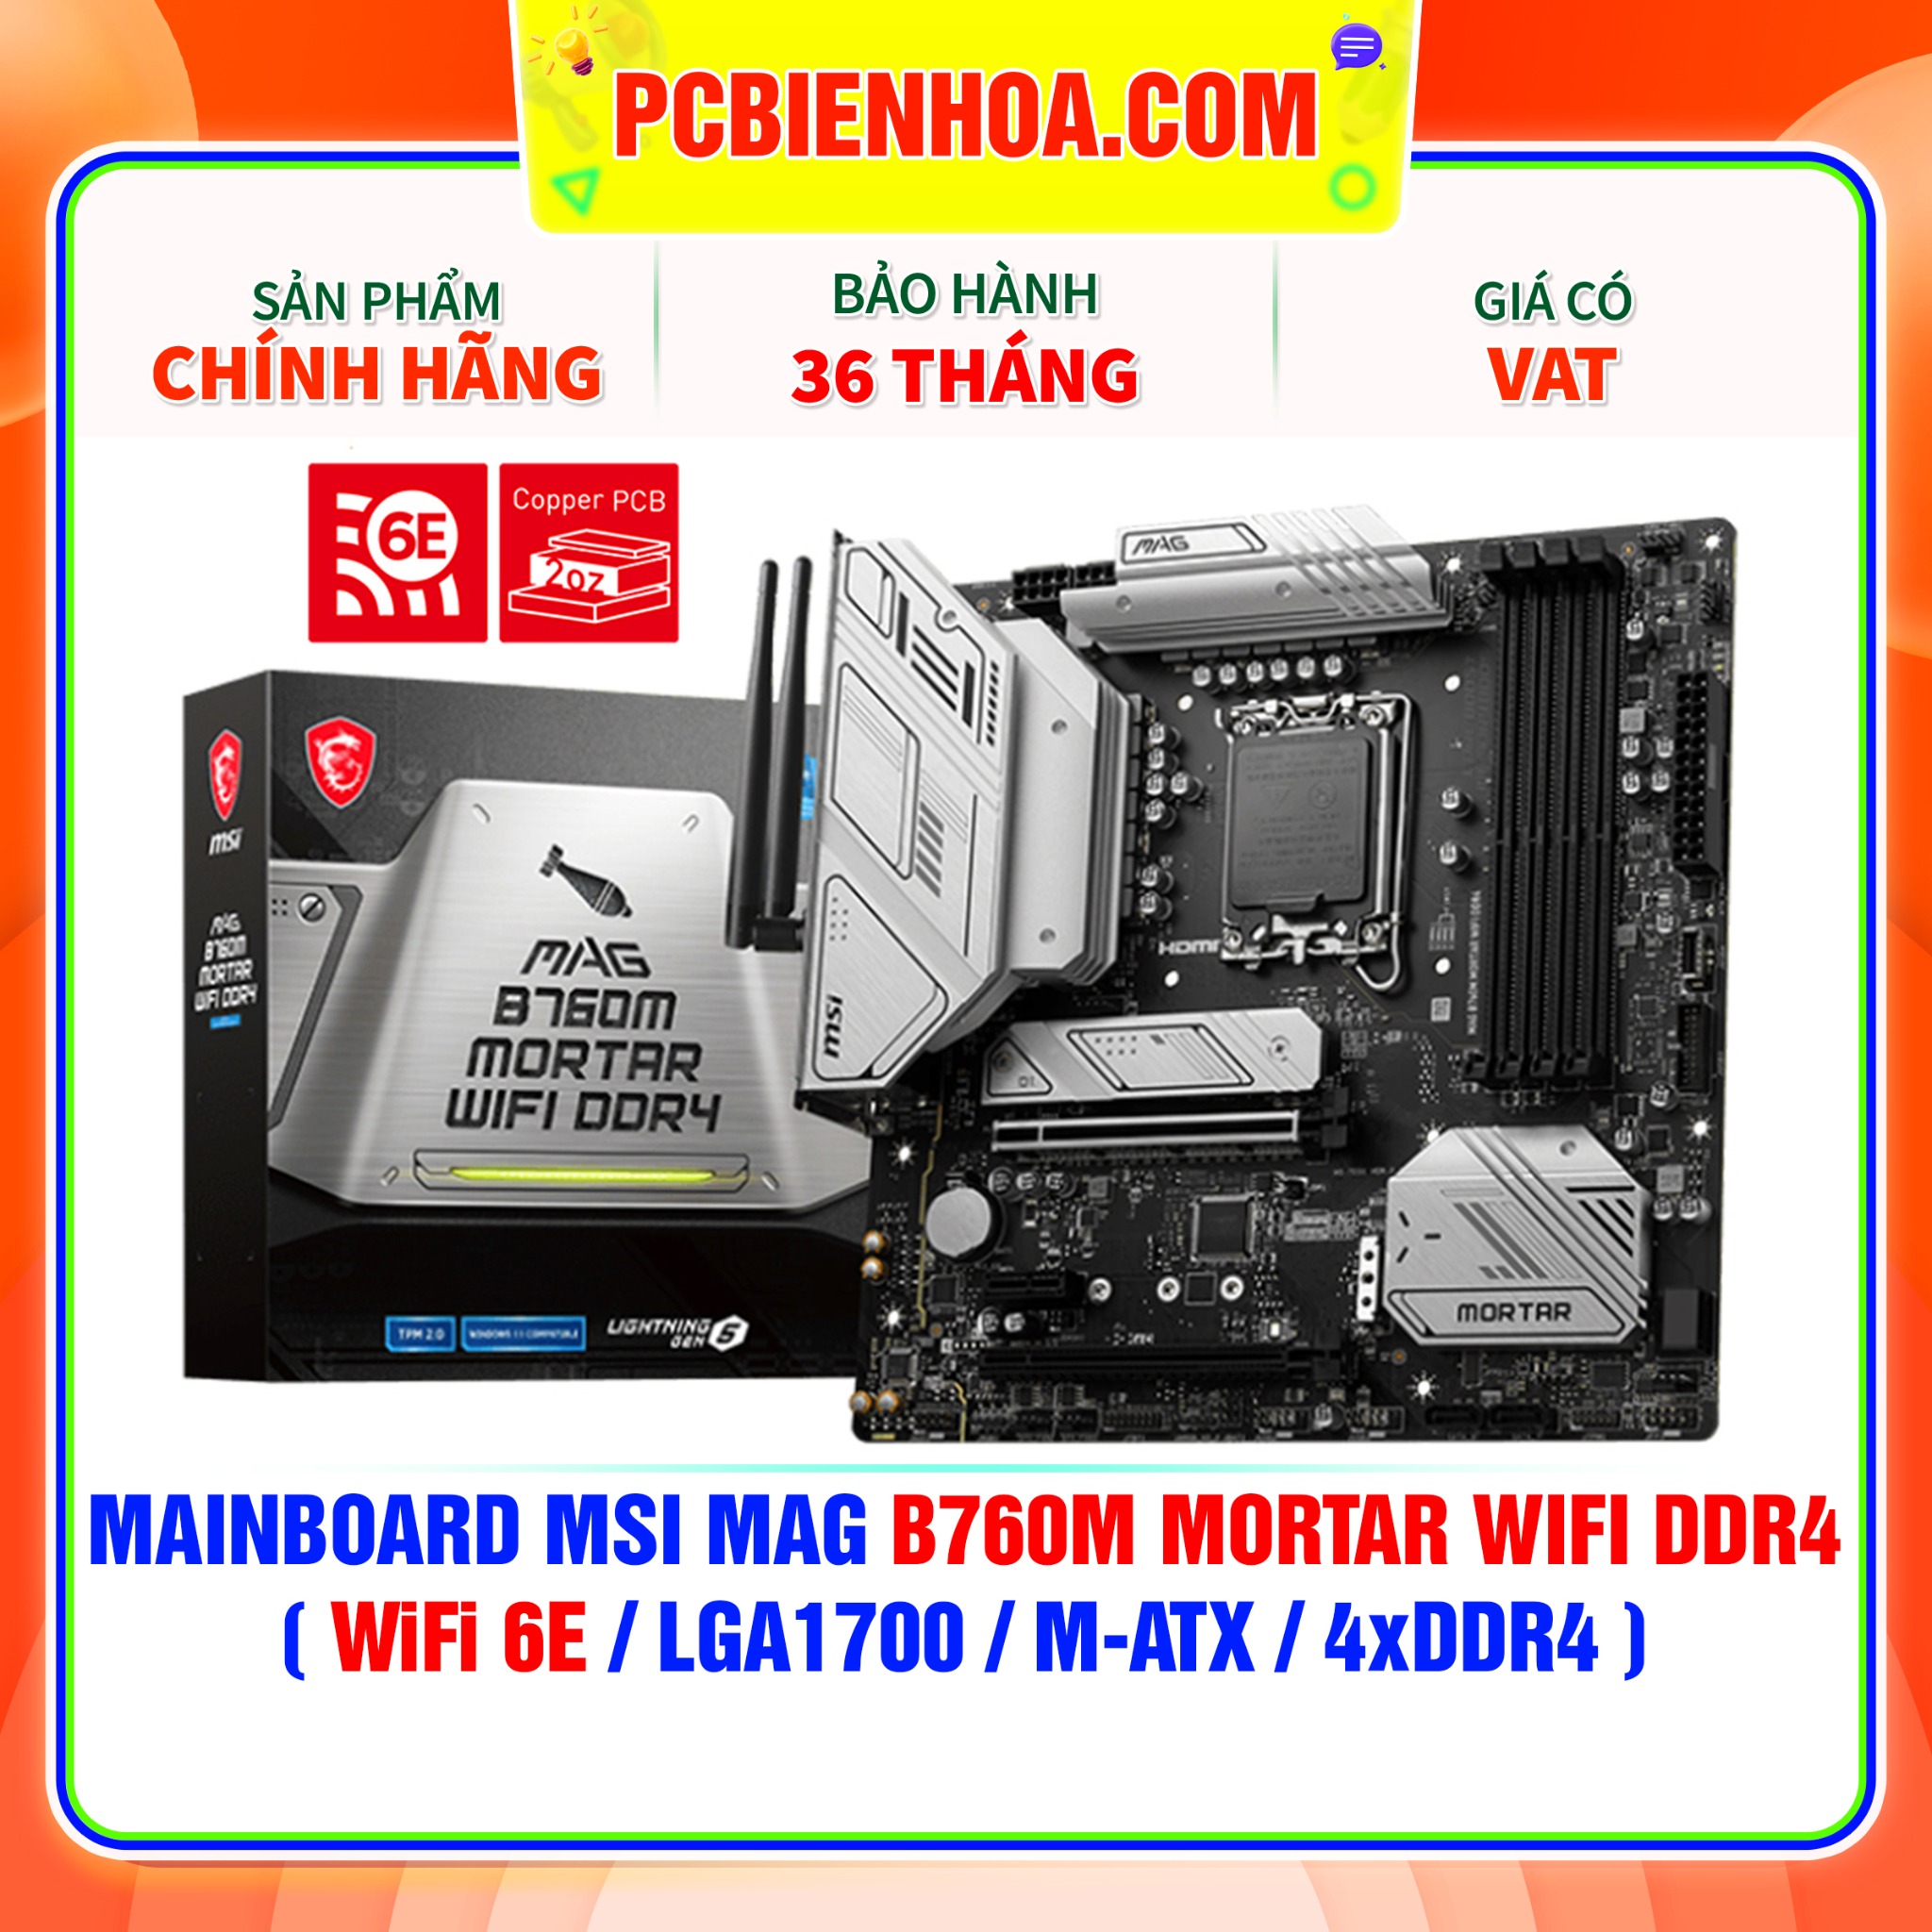 MAINBOARD MSI MAG B760M MORTAR WIFI DDR4  WIFI 6E LGA1700 M-ATX 4xDDR4